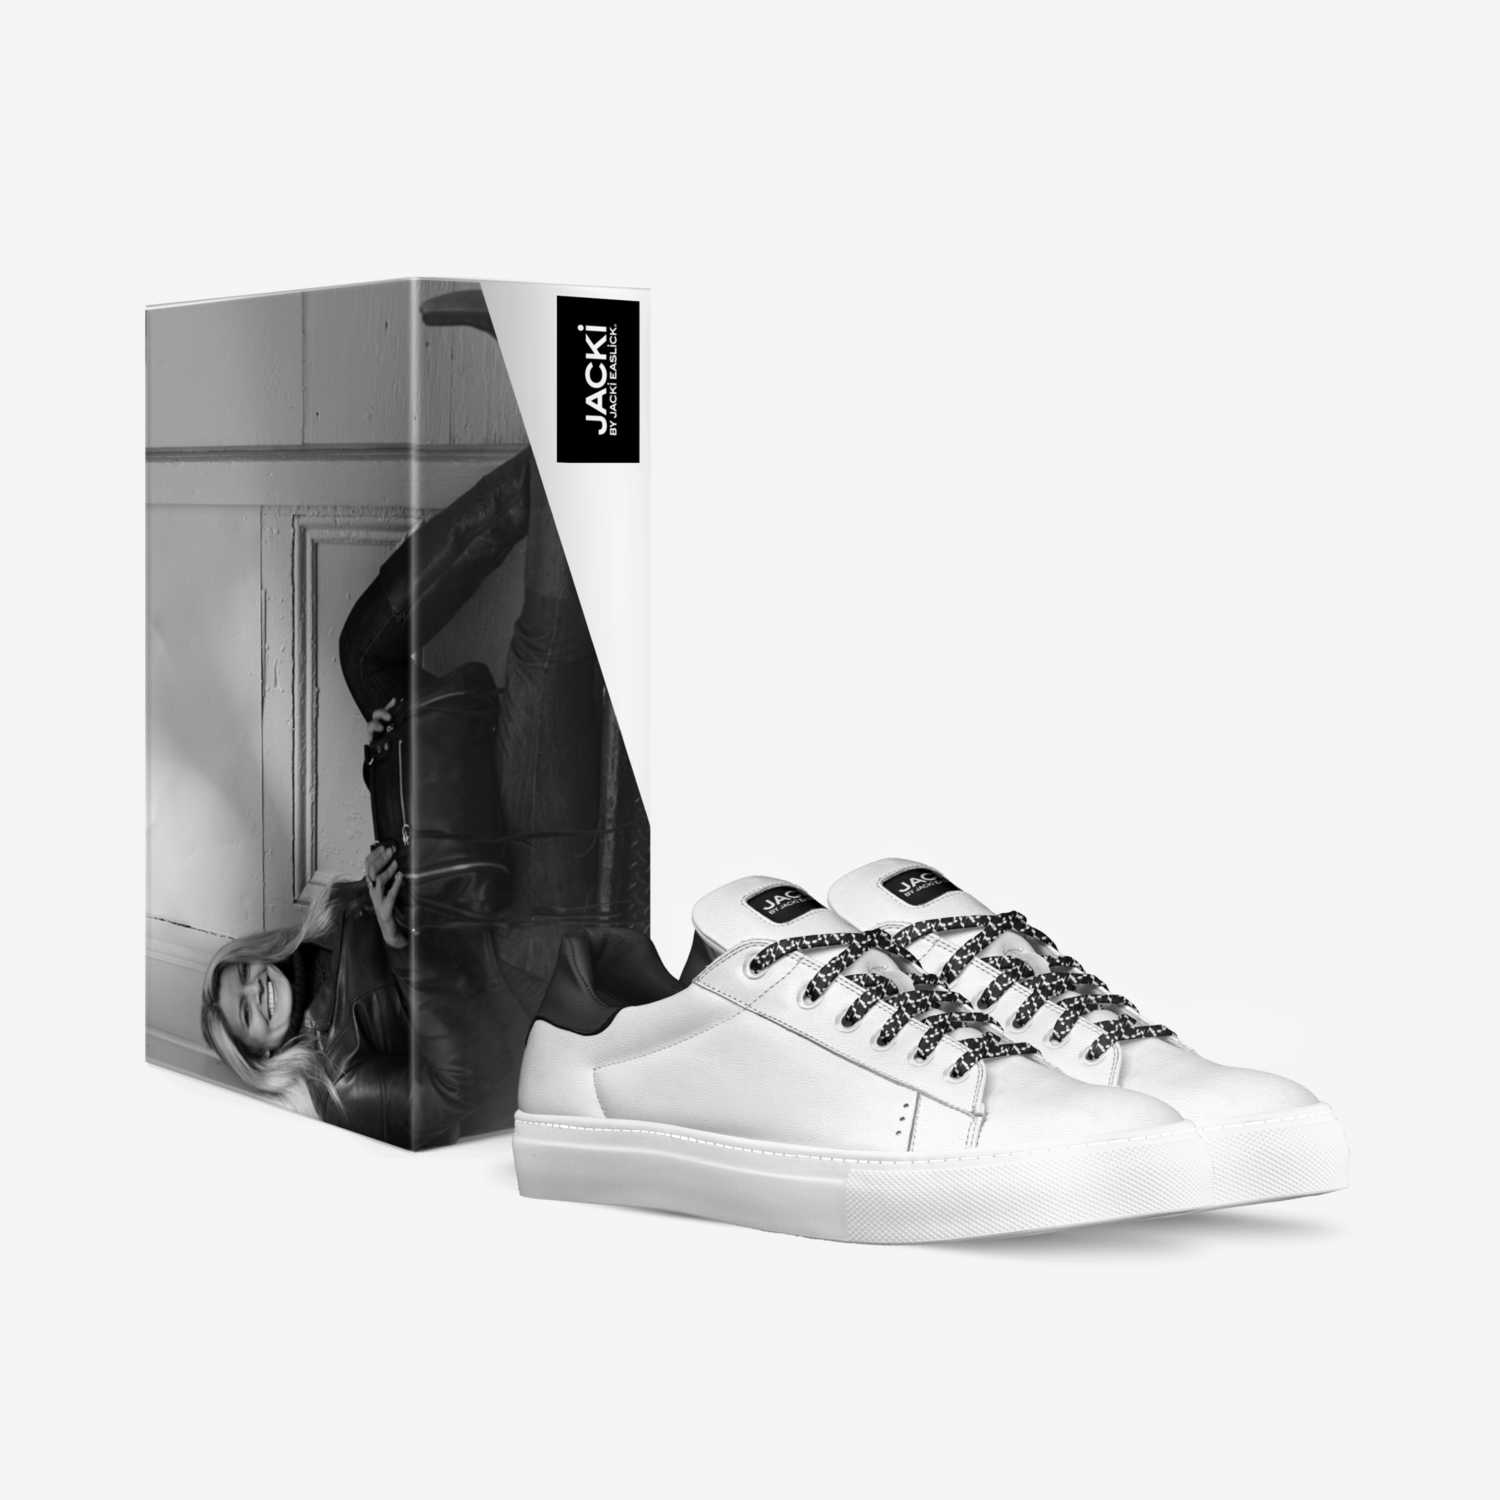 Jacki Easlick custom made in Italy shoes by Jacki Easlick | Box view